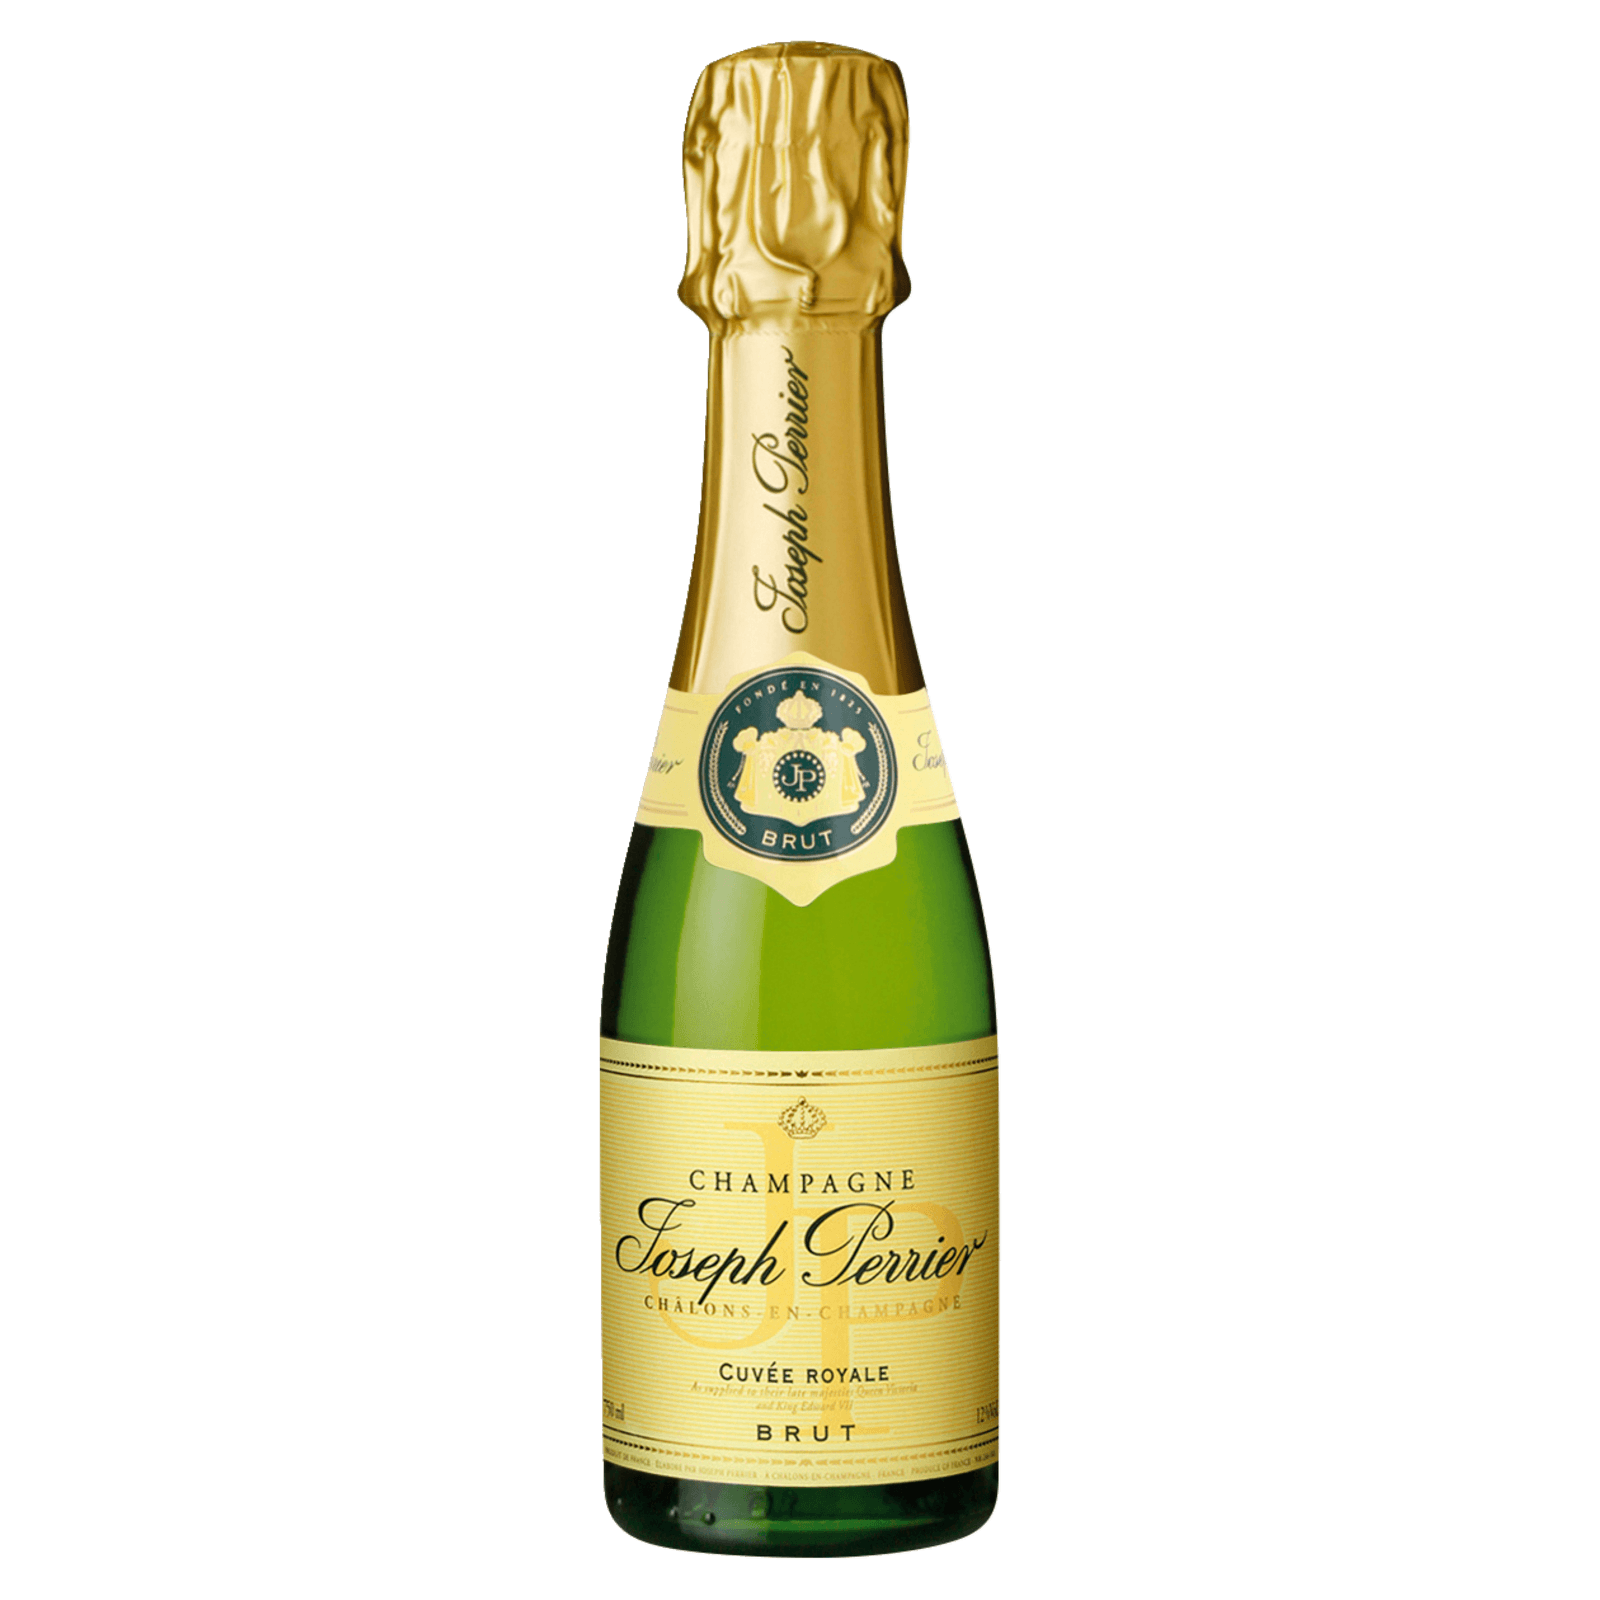 Champagne Chanoine 22,99€ Lidl für Cuvée von brut, Champagner Héritage 1730